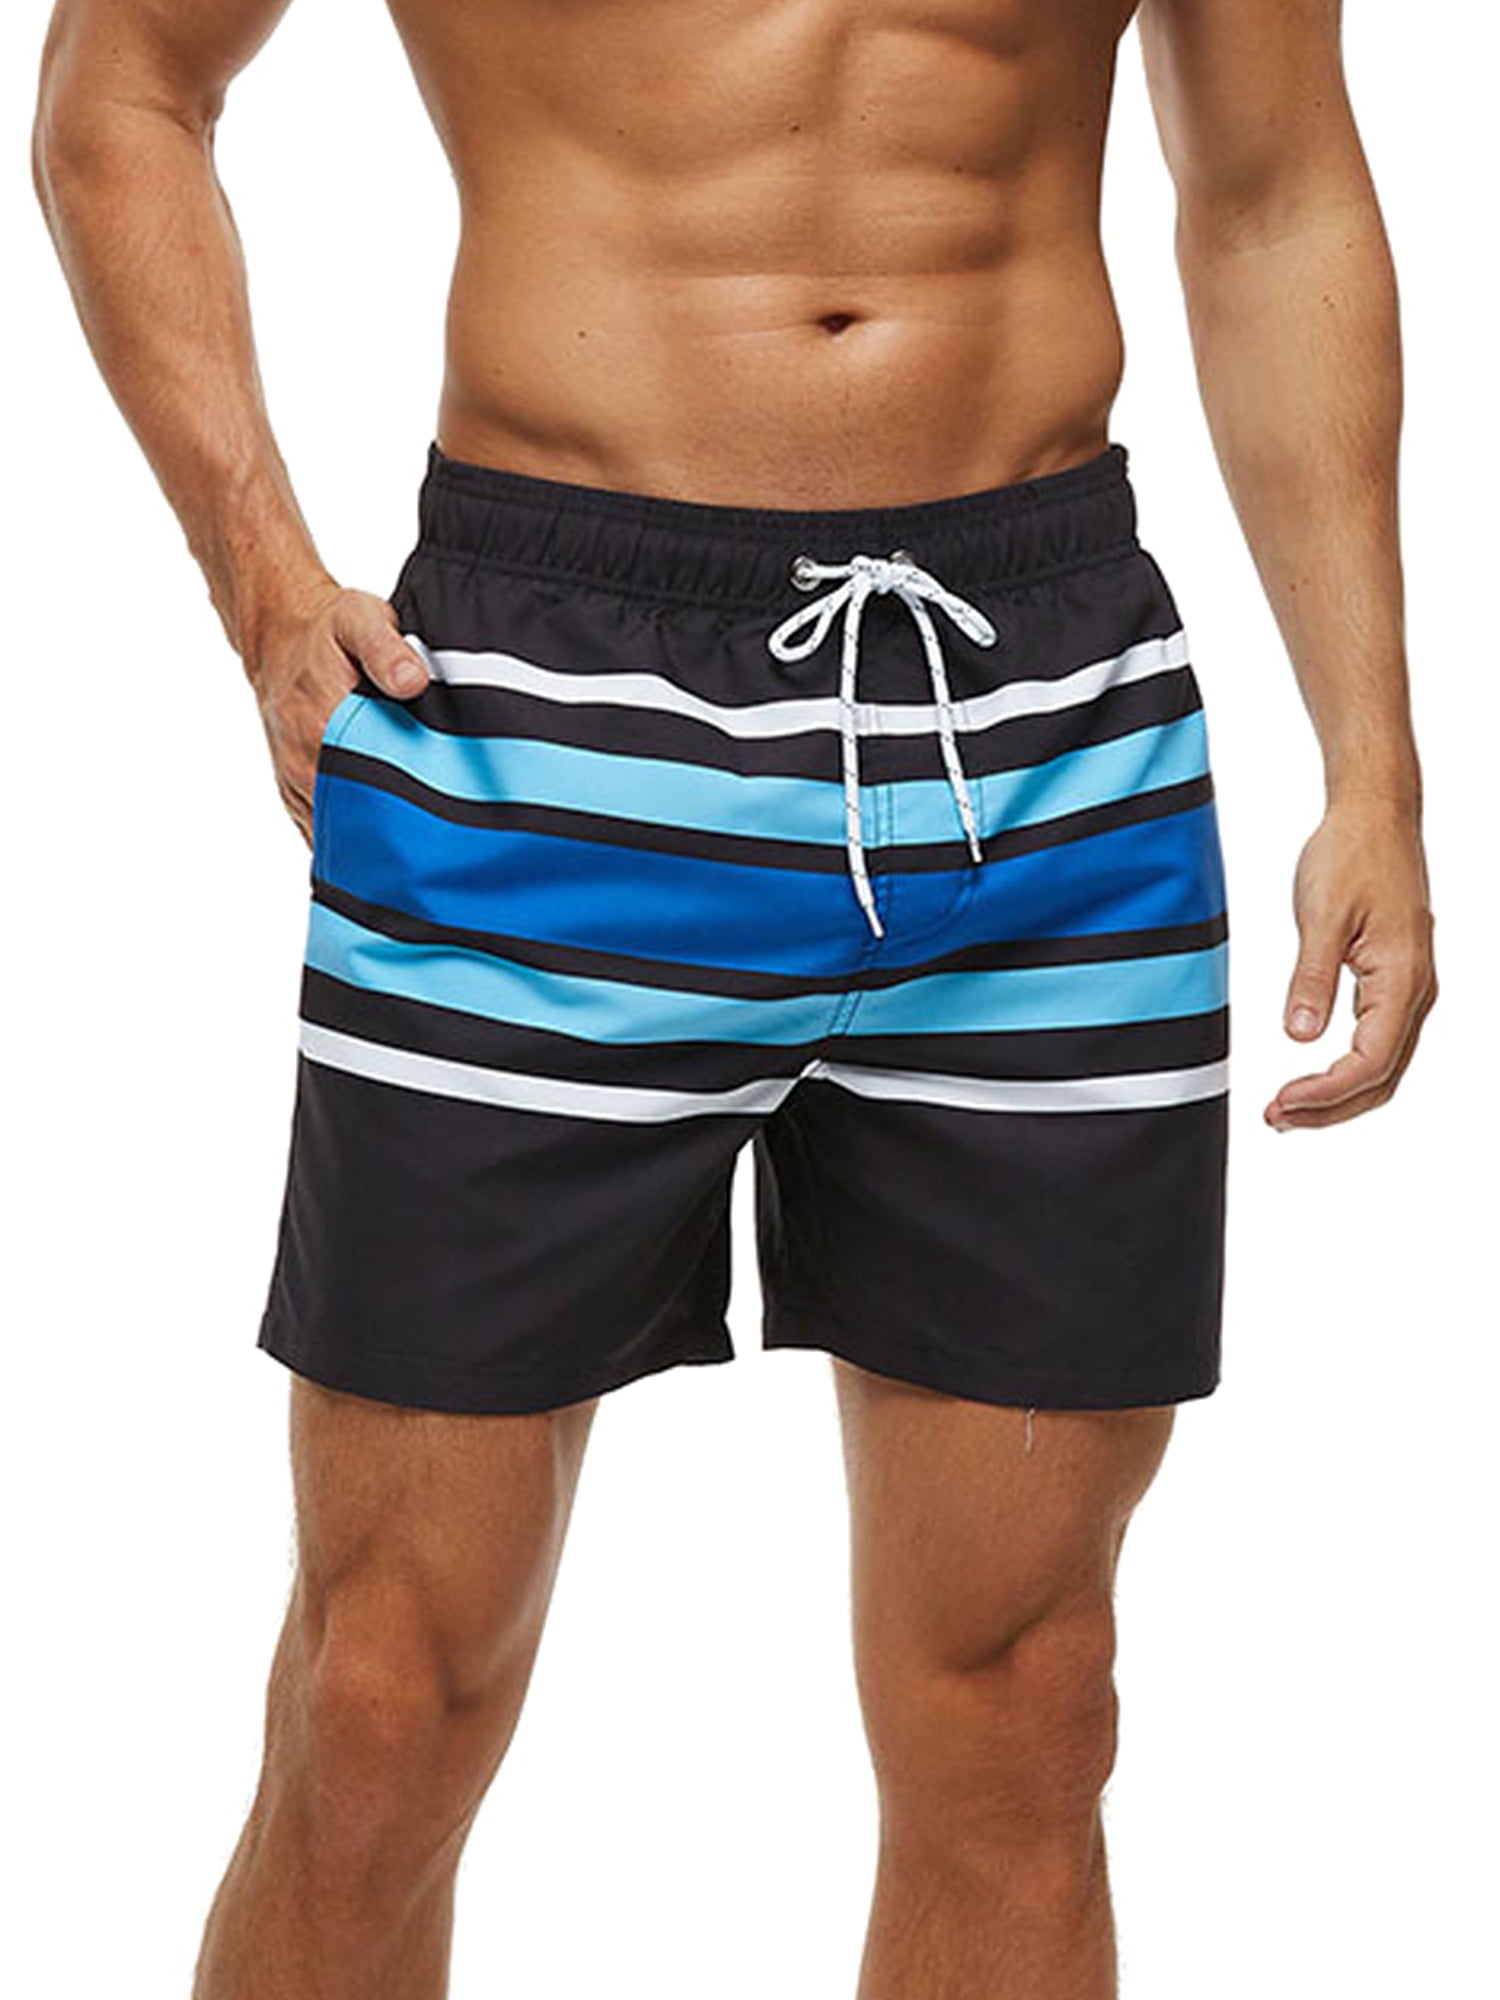 Mens Youth Swimwear Trunks,Fxbar Camouflage Hot Print Men Beach Shorts Surfing Swim Board Shorts Bathing Suit